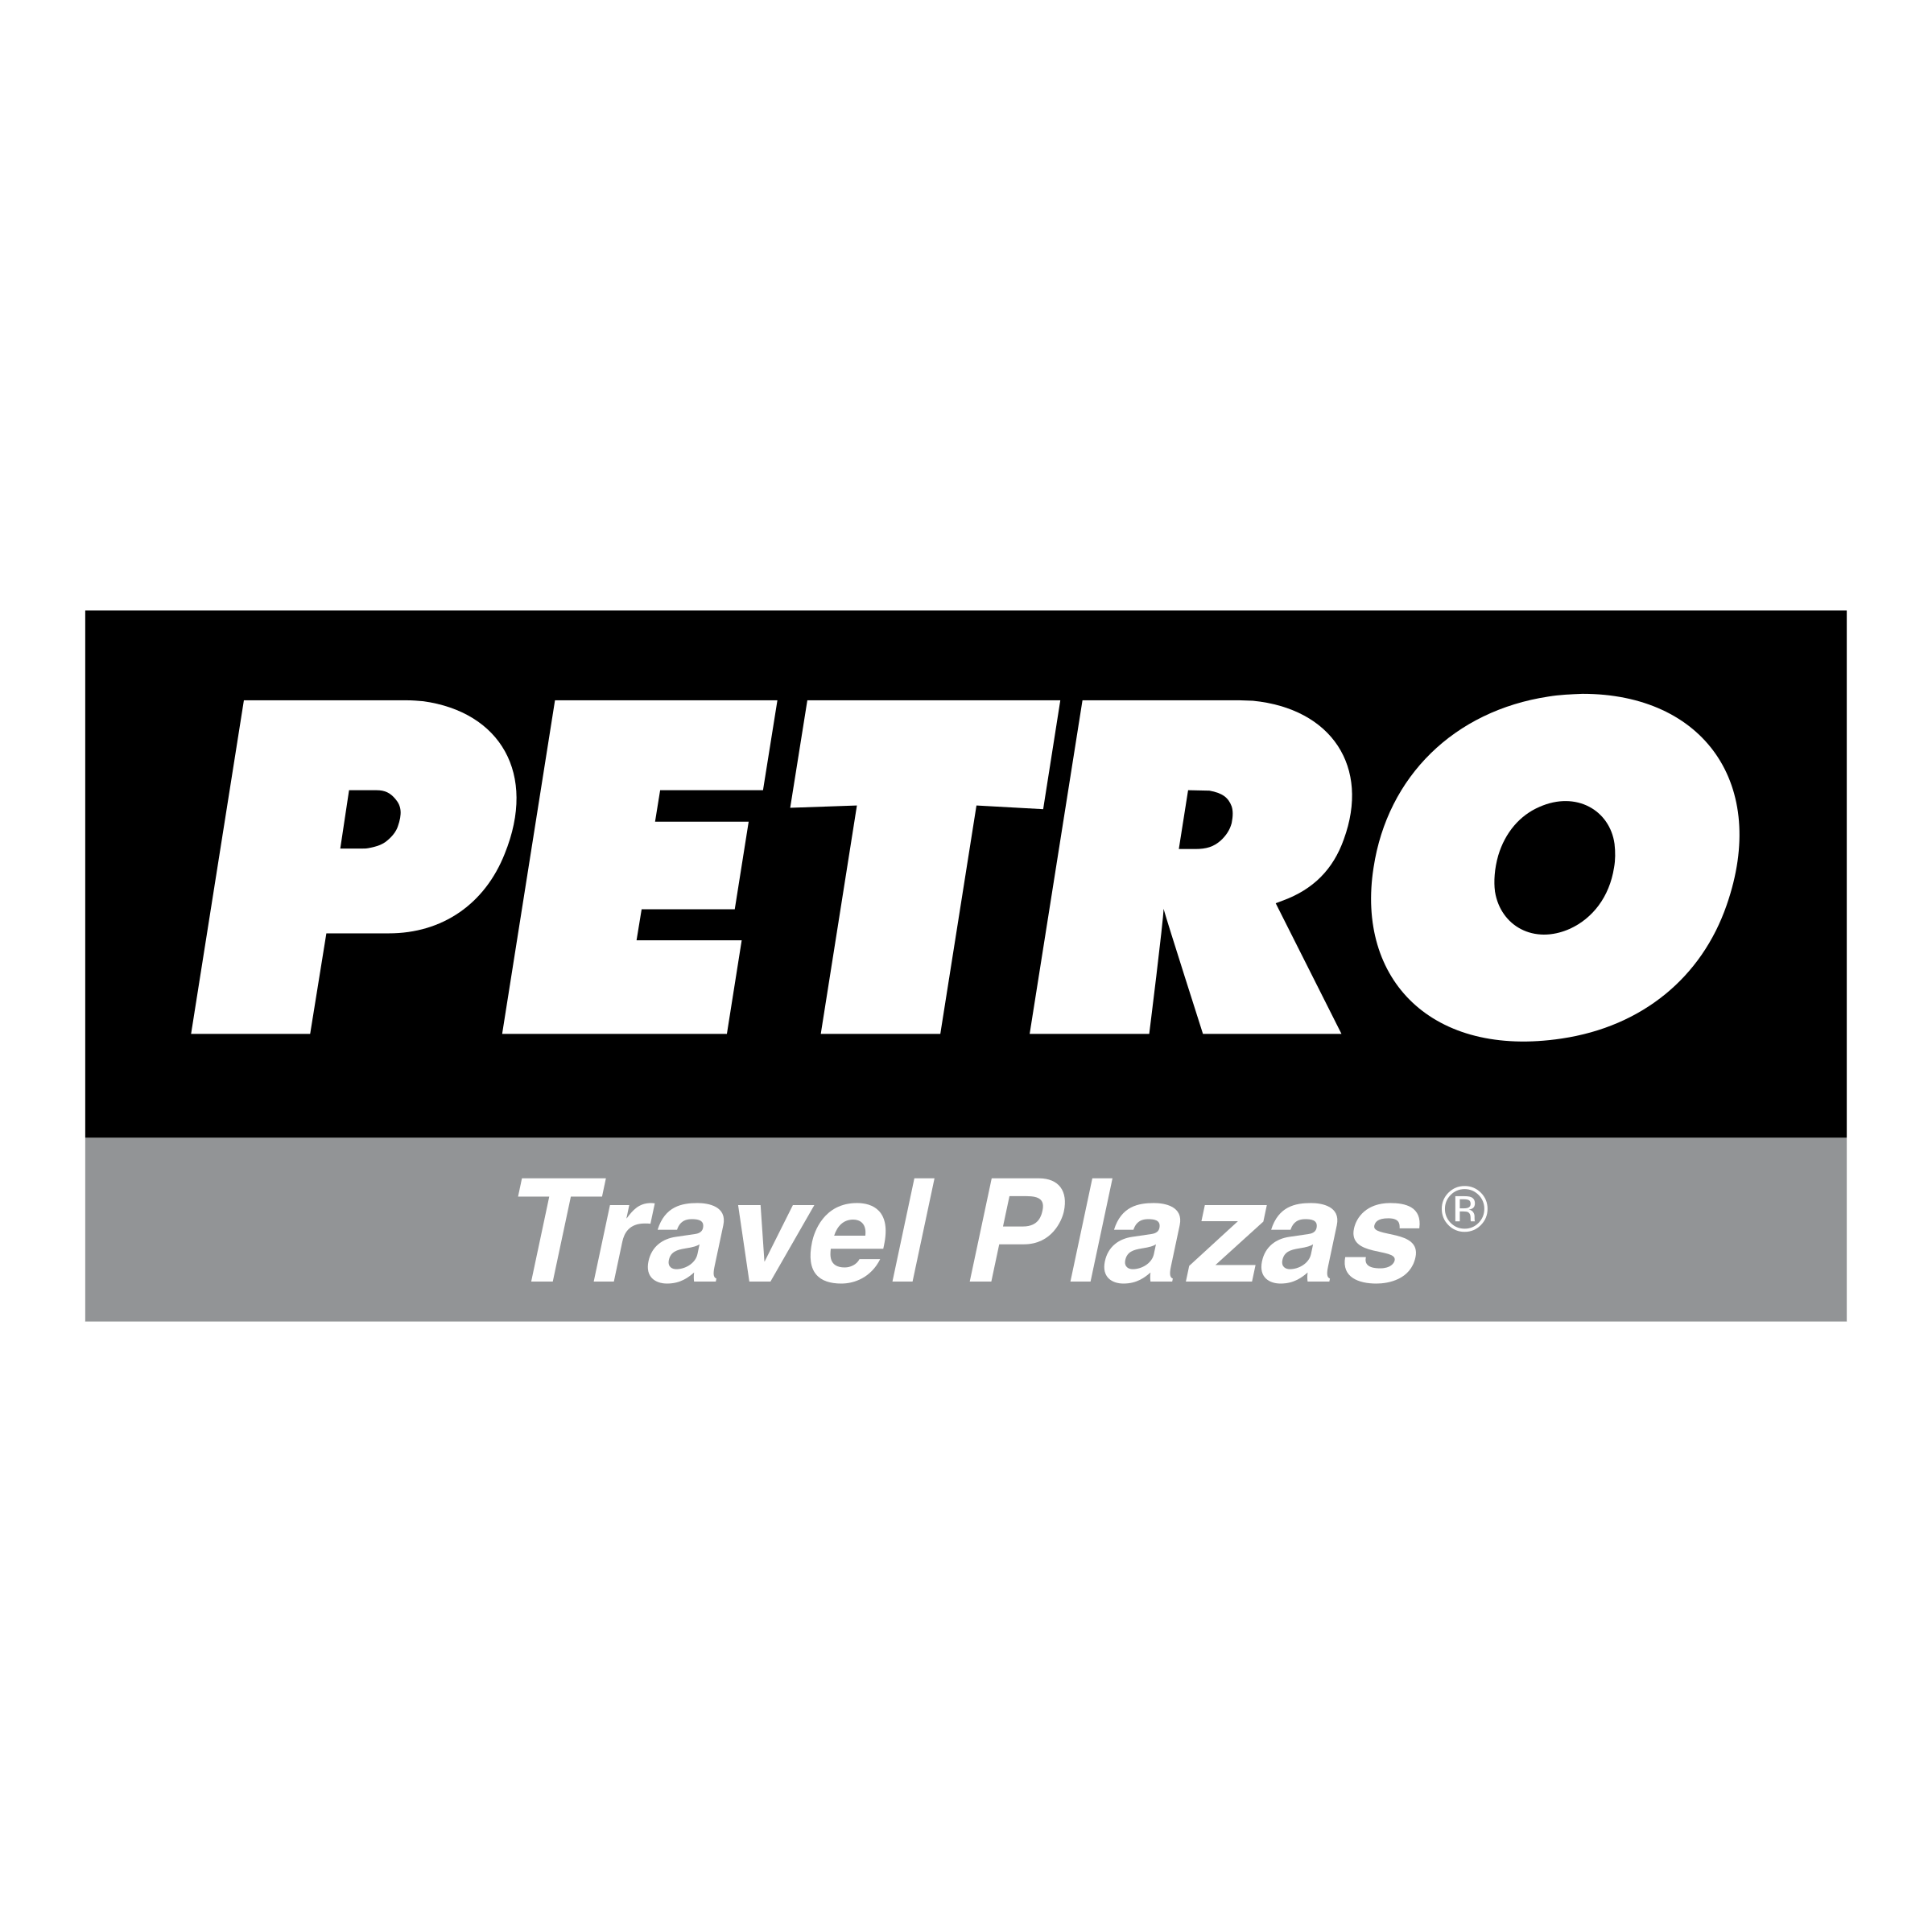 Petro Logo - Petro Logo PNG Transparent & SVG Vector